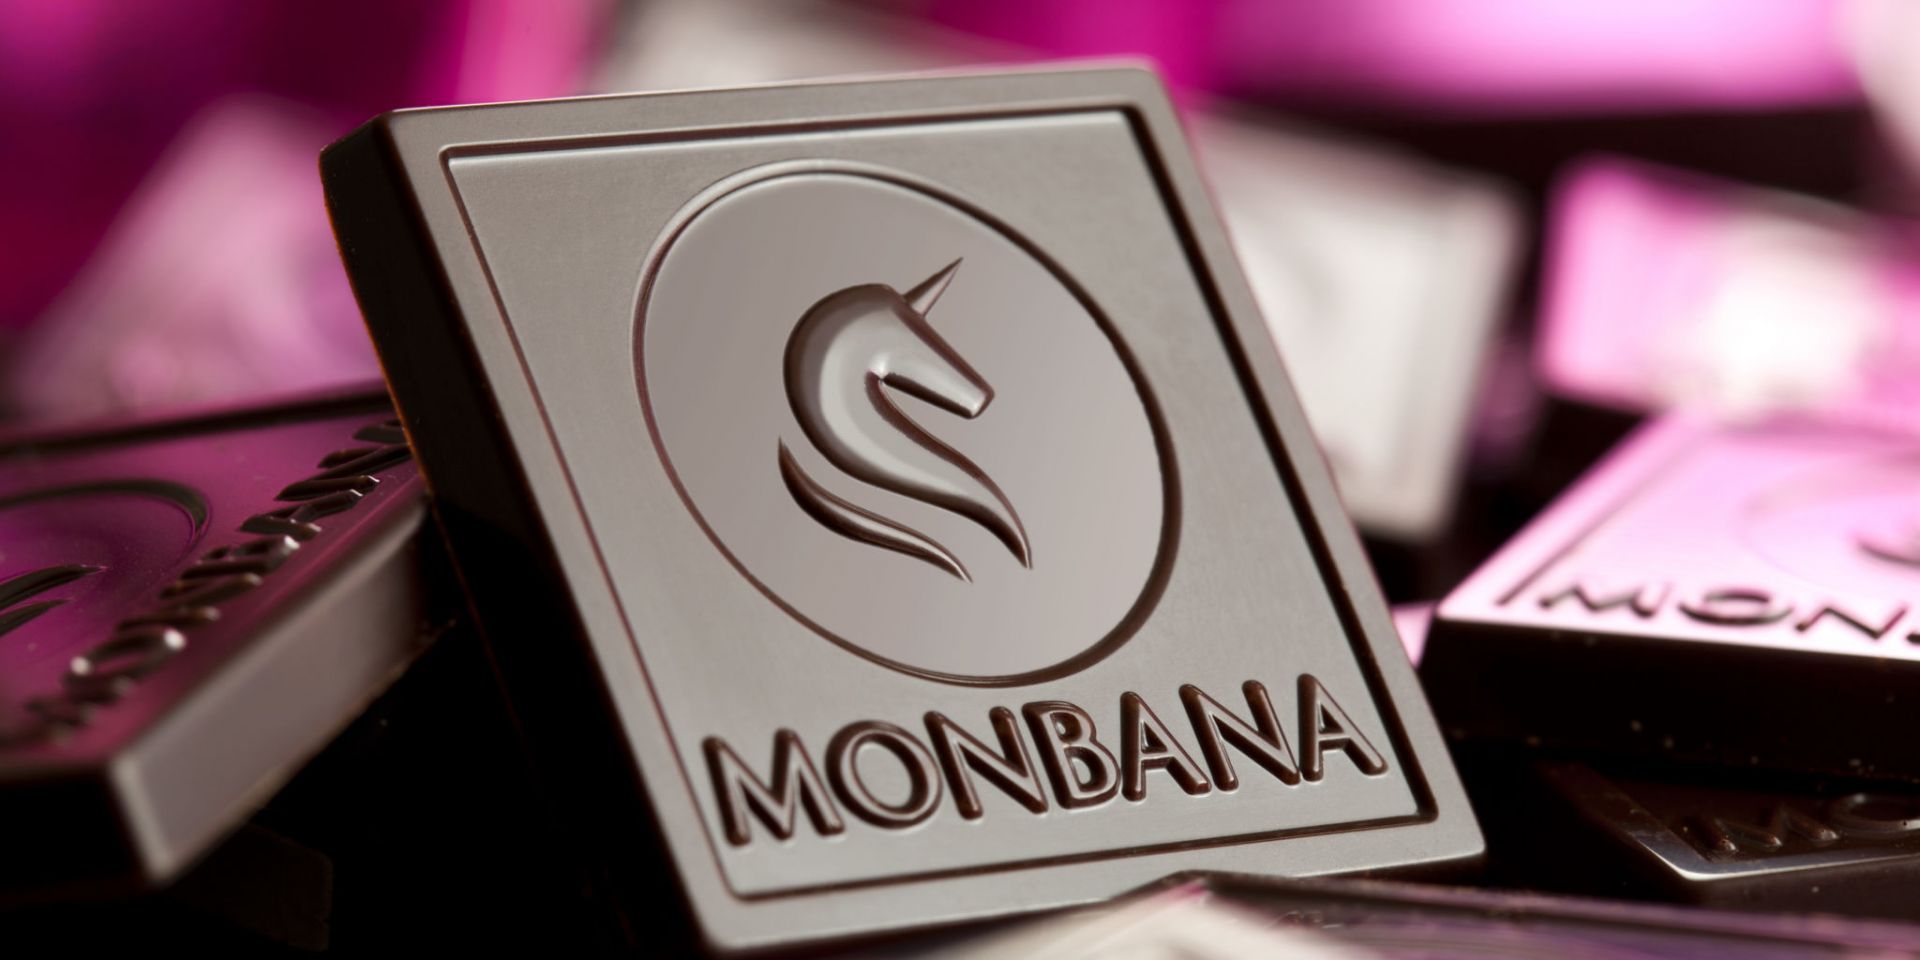 Chocolaterie Monbana –